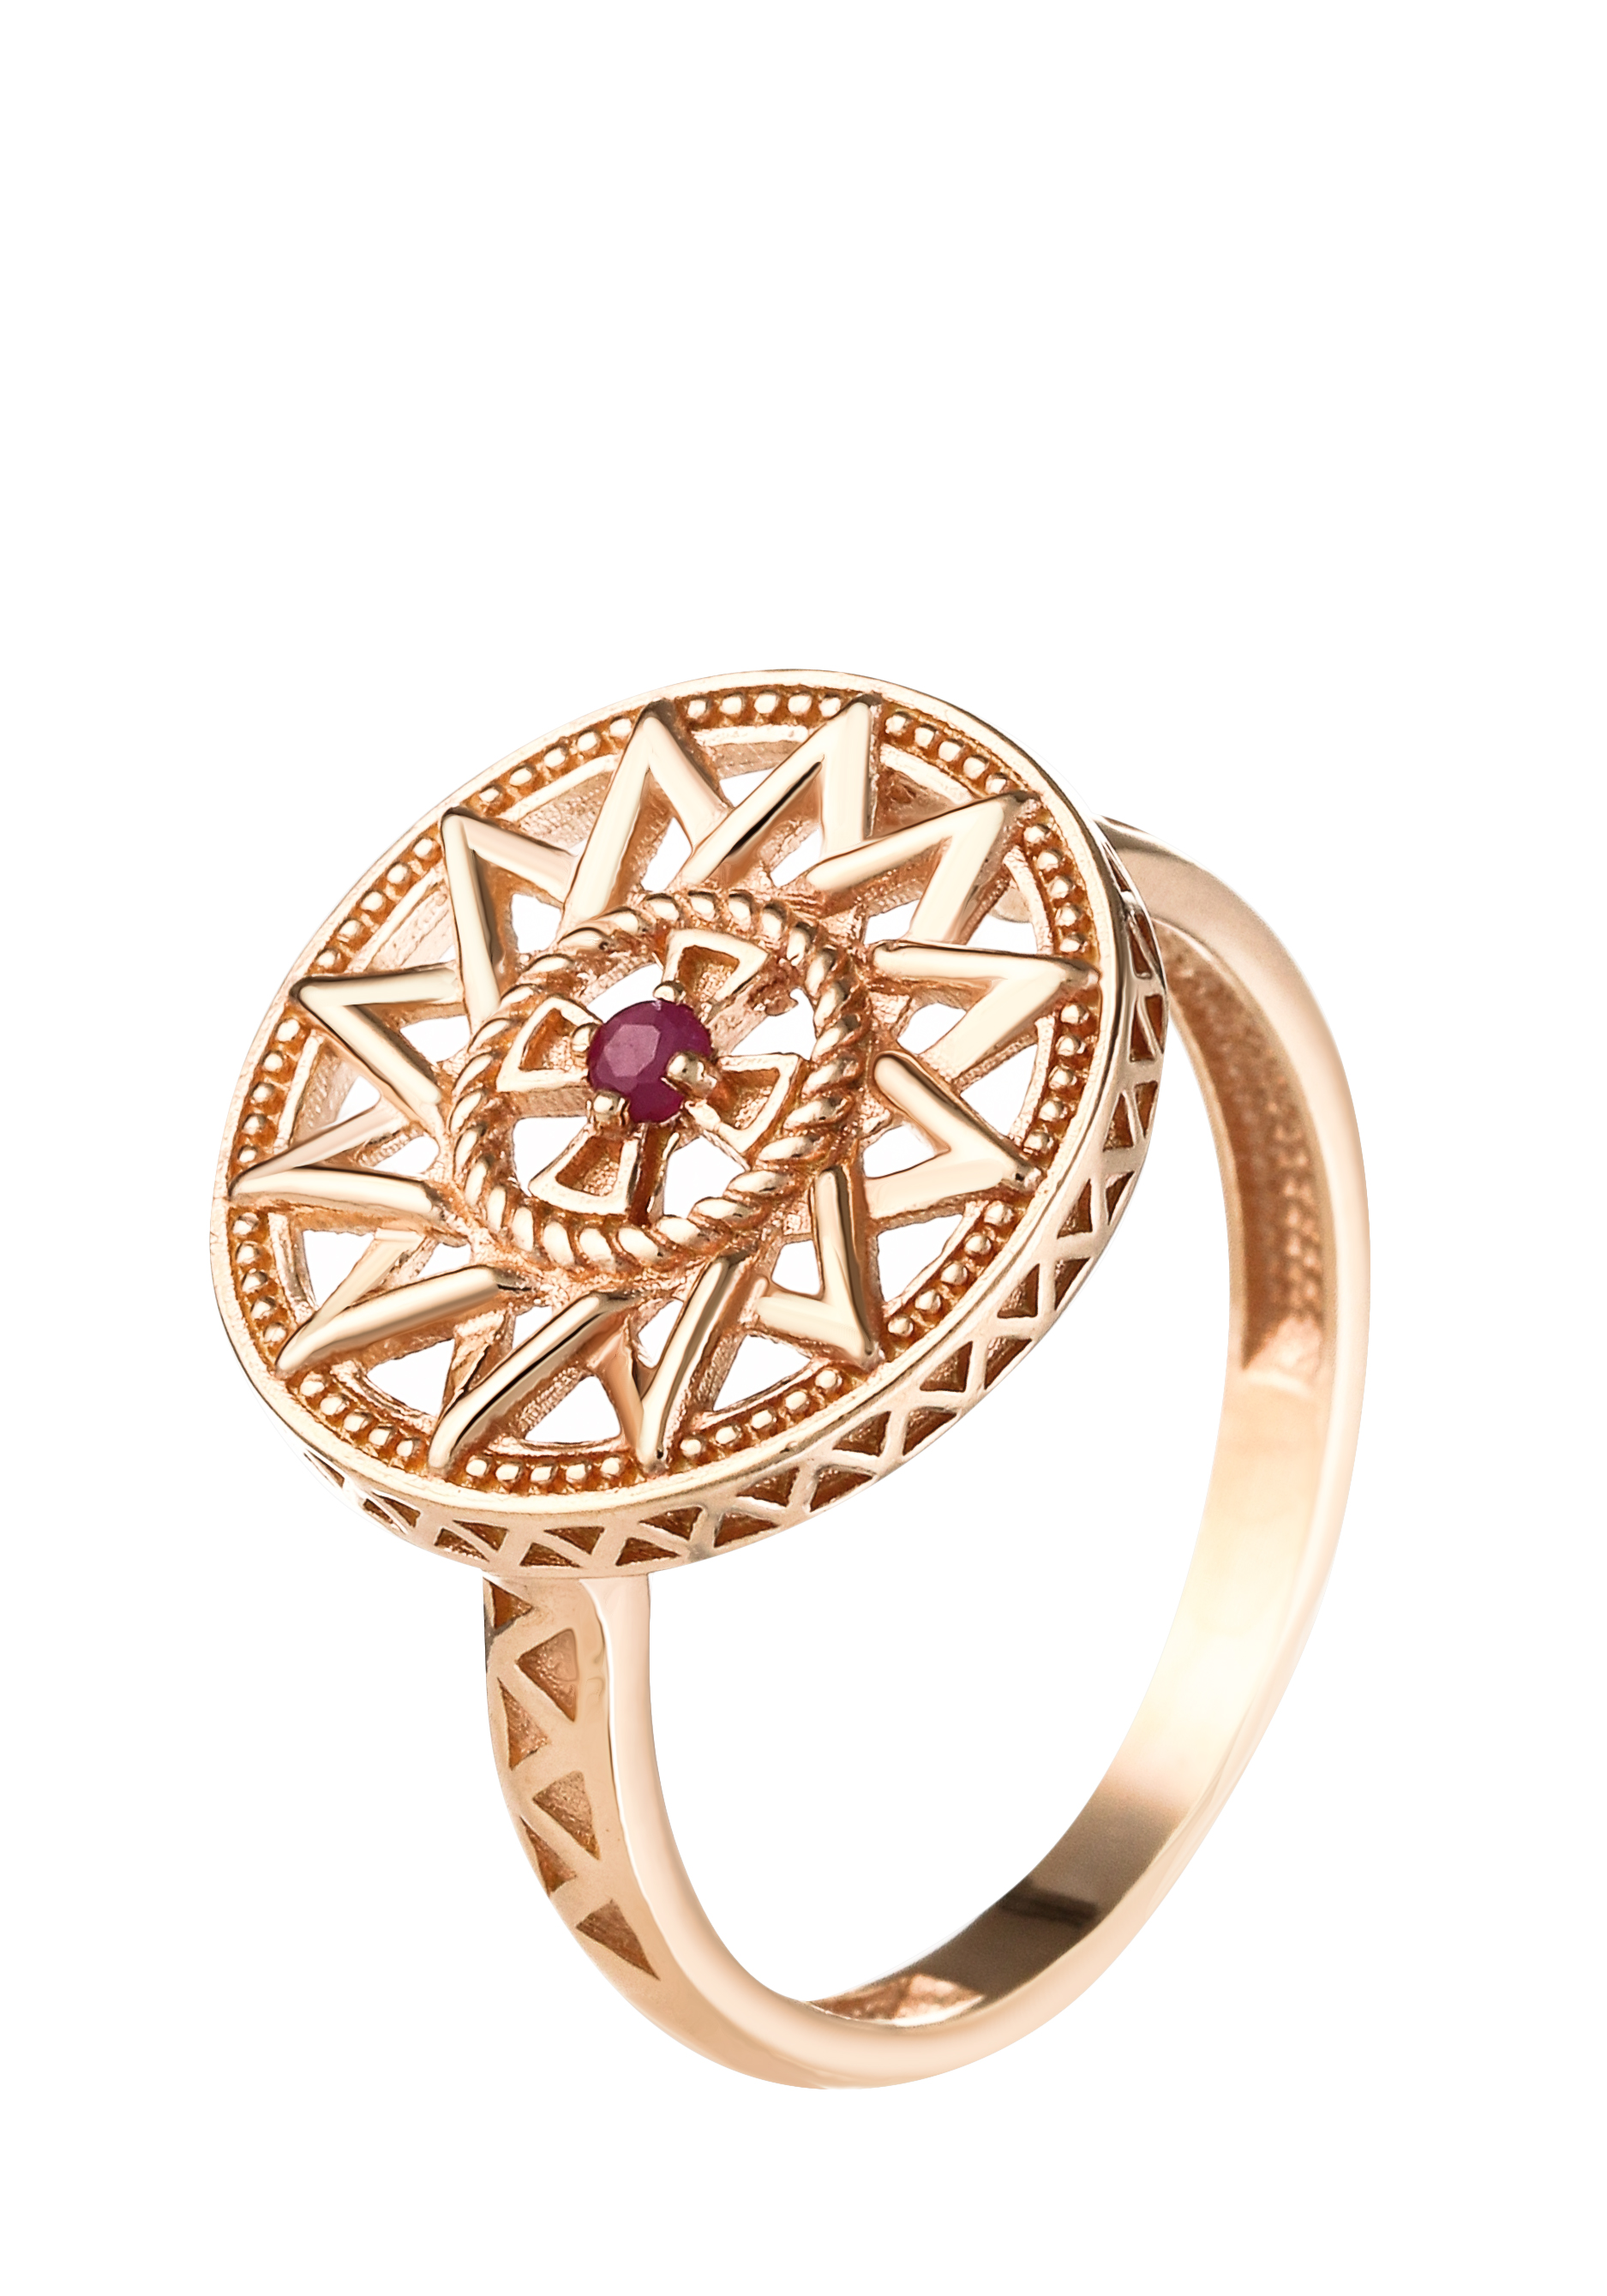 Кольцо серебряное Эрцгамма серебряное кольцо цветочный ансамбль